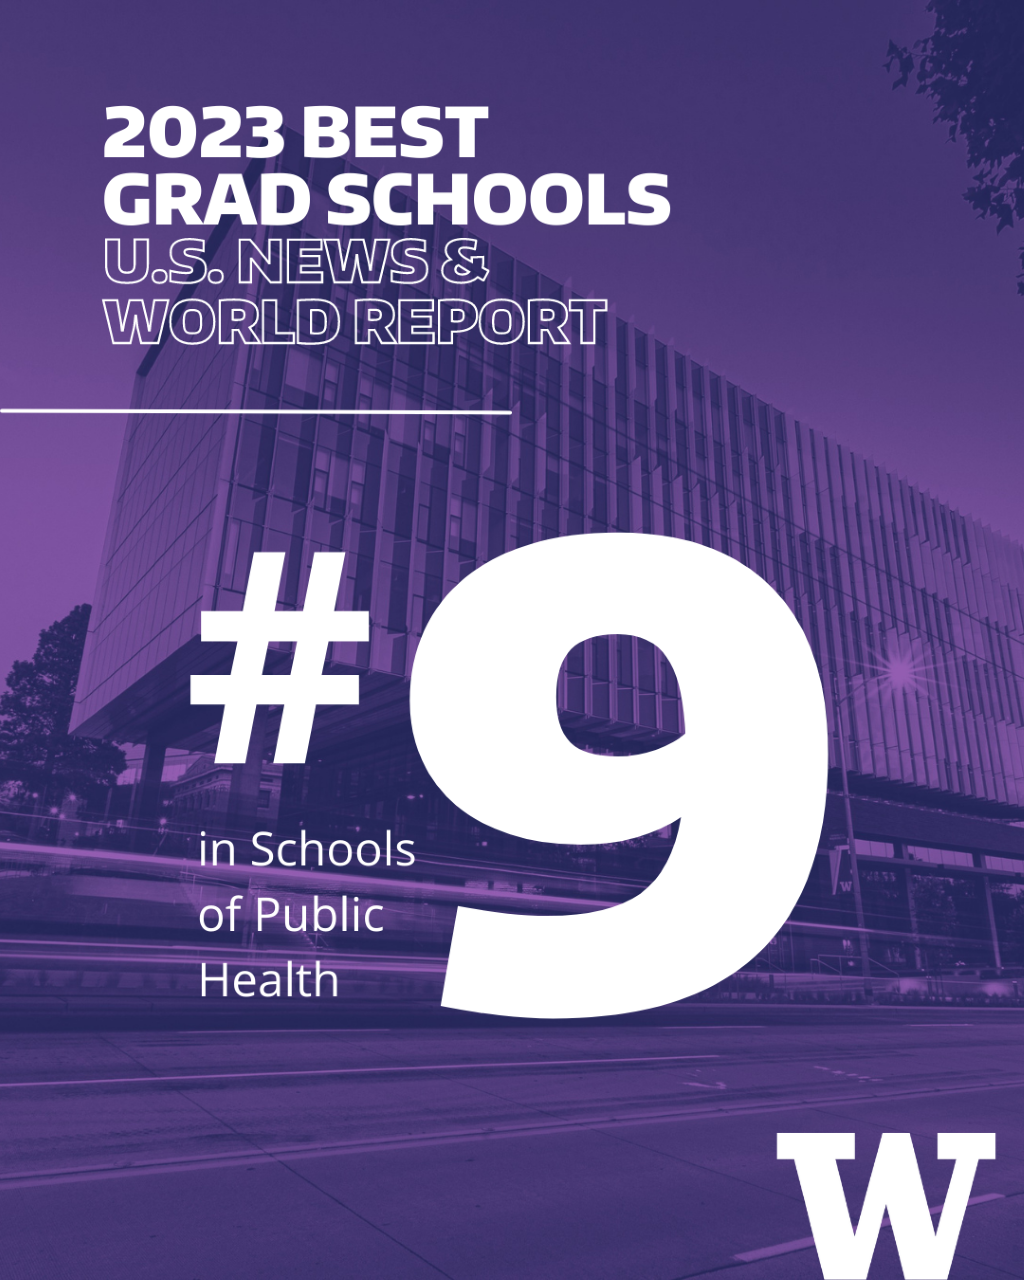 2023 BEST GRAD SCHOOLS. US NEWS & WORLD REPORT. #9 IN SCHOOLS OF PUBLIC HEALTH. TEXT IS ON TOP OF PURPLE TINTED IMAGE OF HANS ROSLING CENTER WITH UW LOGO.